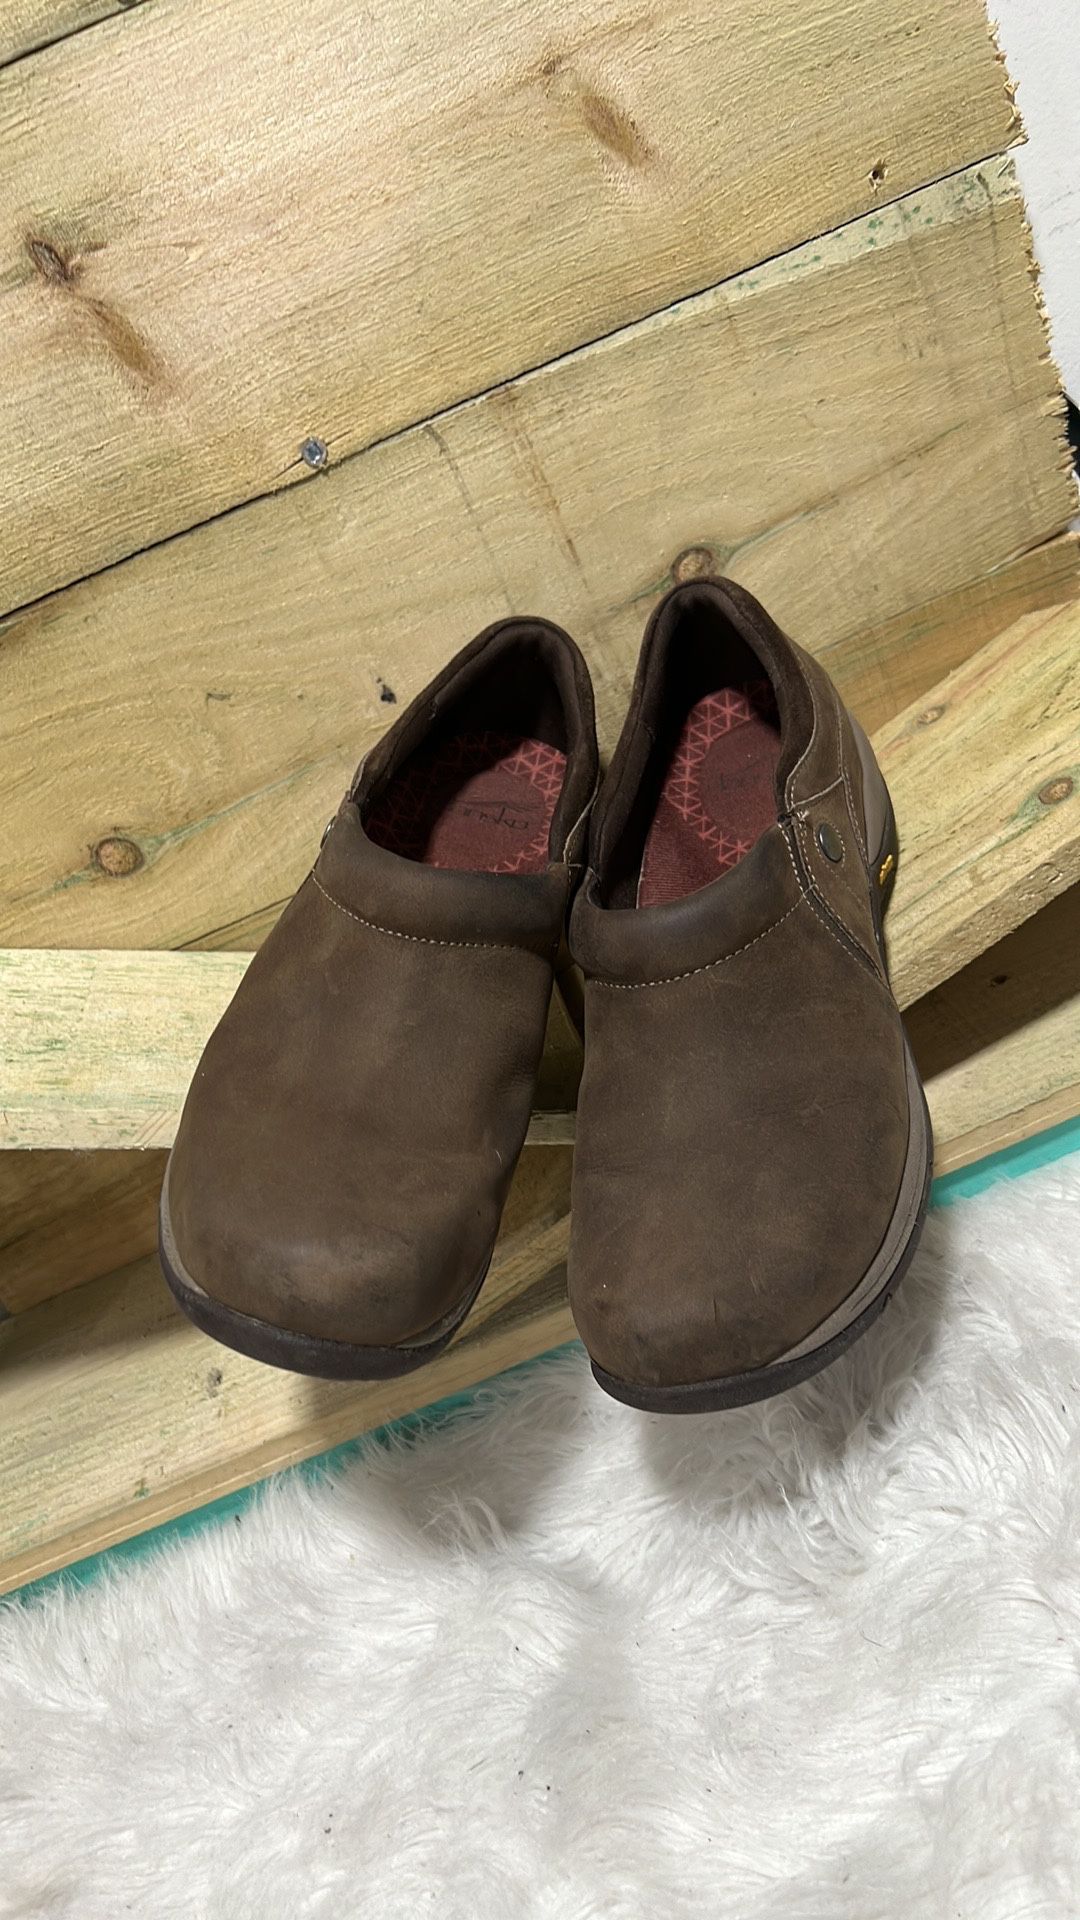 Dansko Celeste Size EU 40 9.5-10 Shoes Nubuck Leather Brown Vibram Waterproof